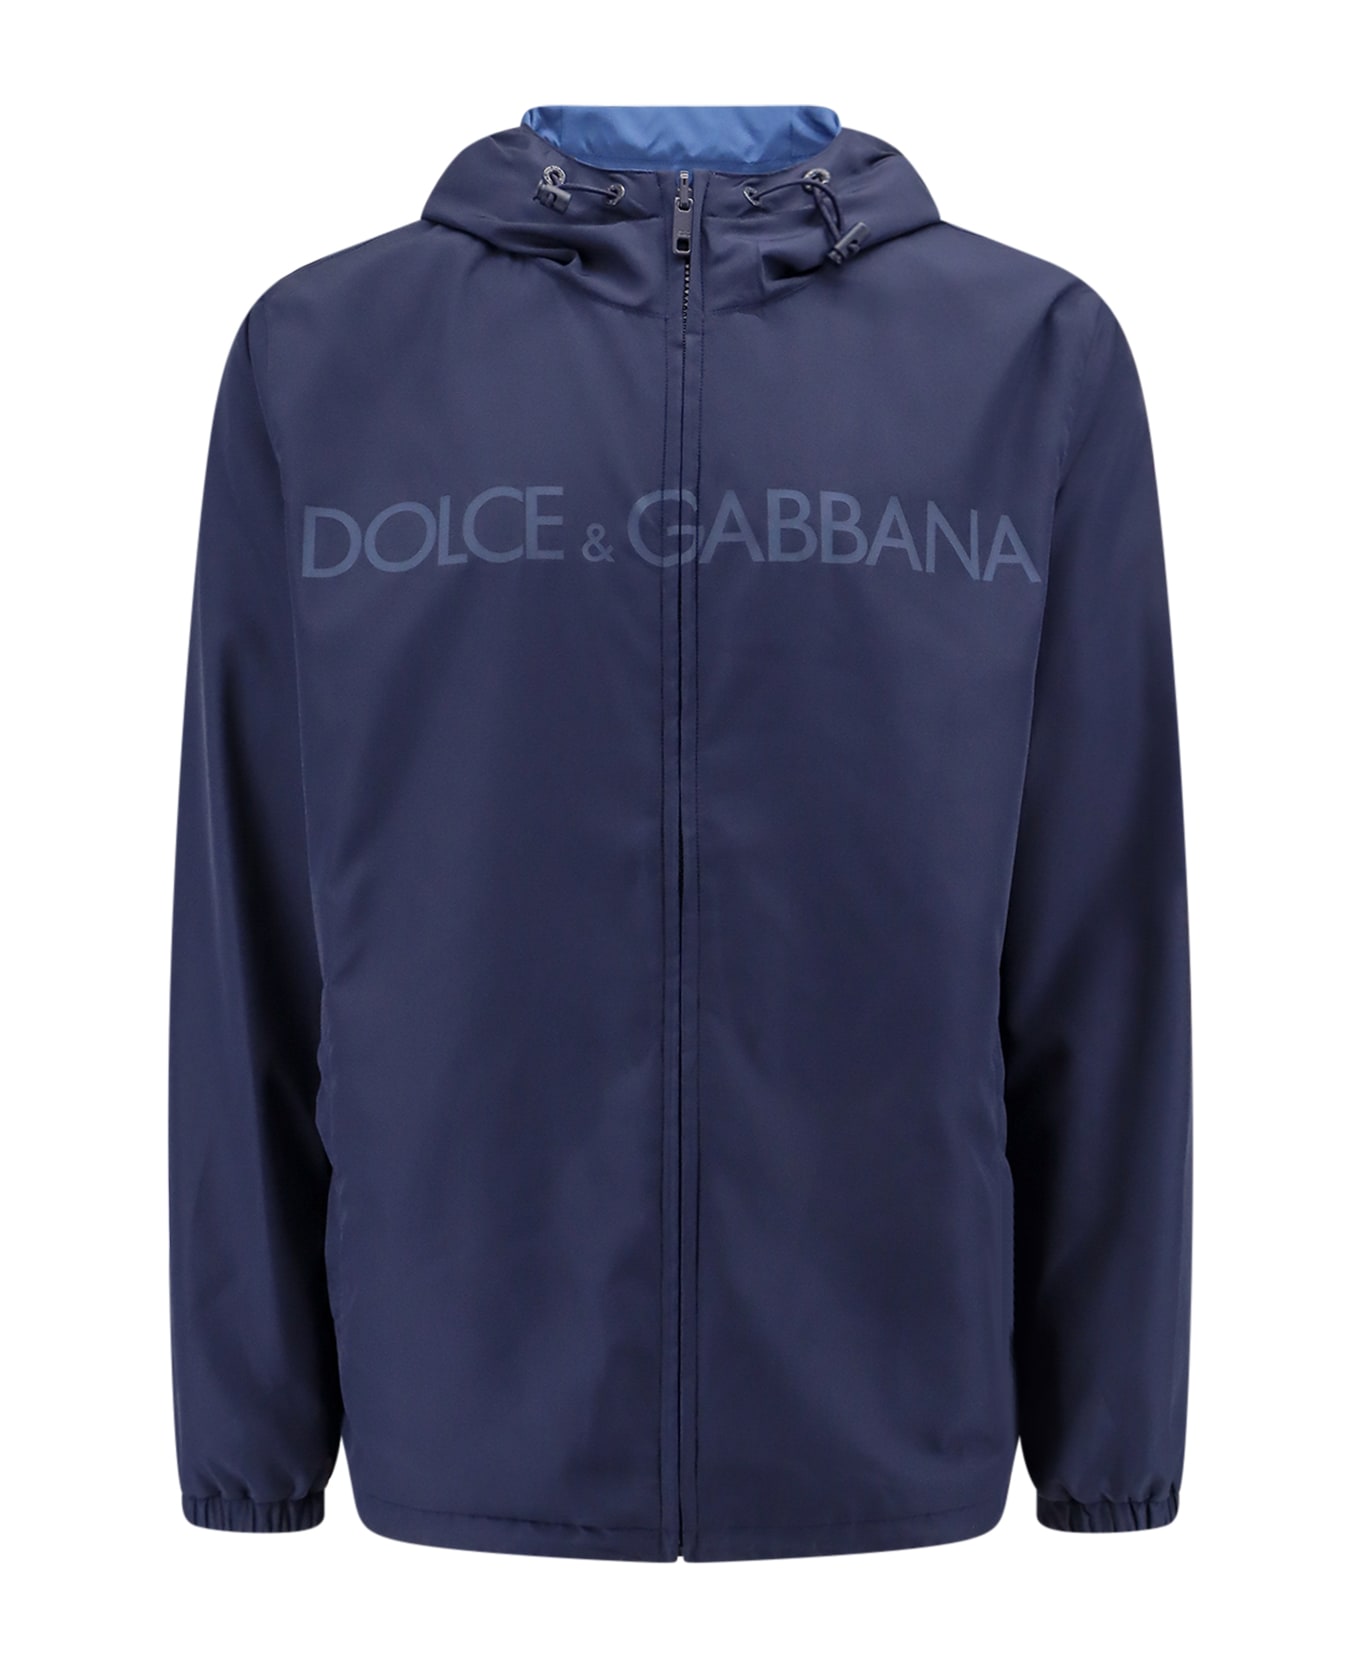 Dolce & Gabbana Jacket - Blu Scuro ジャケット